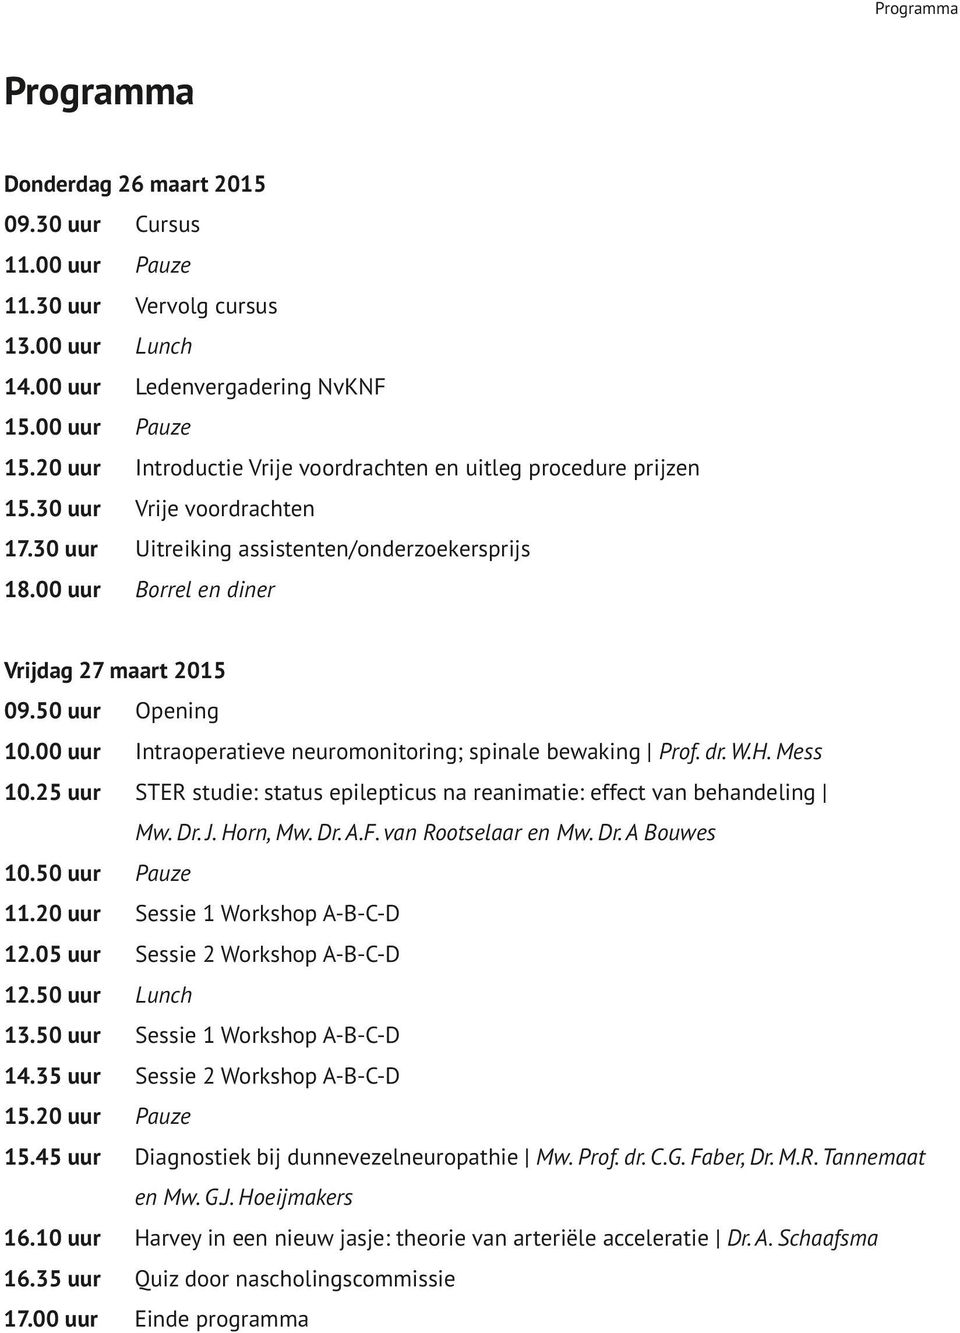 50 uur Opening 10.00 uur Intraoperatieve neuromonitoring; spinale bewaking Prof. dr. W.H. Mess 10.25 uur STER studie: status epilepticus na reanimatie: effect van behandeling Mw. Dr. J. Horn, Mw. Dr. A.